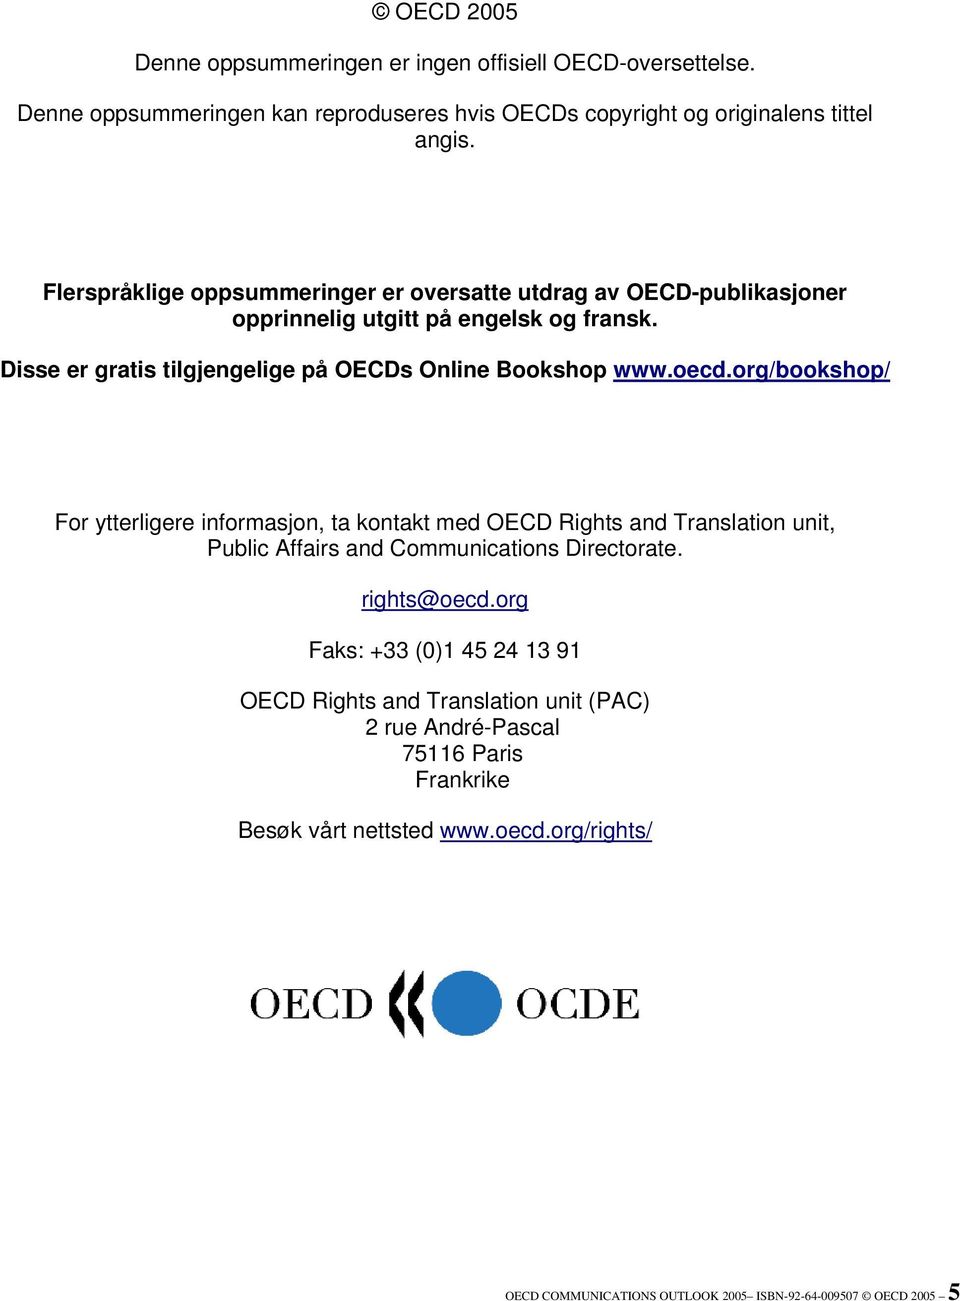 oecd.org/bookshop/ For ytterligere informasjon, ta kontakt med OECD Rights and Translation unit, Public Affairs and Communications Directorate. rights@oecd.